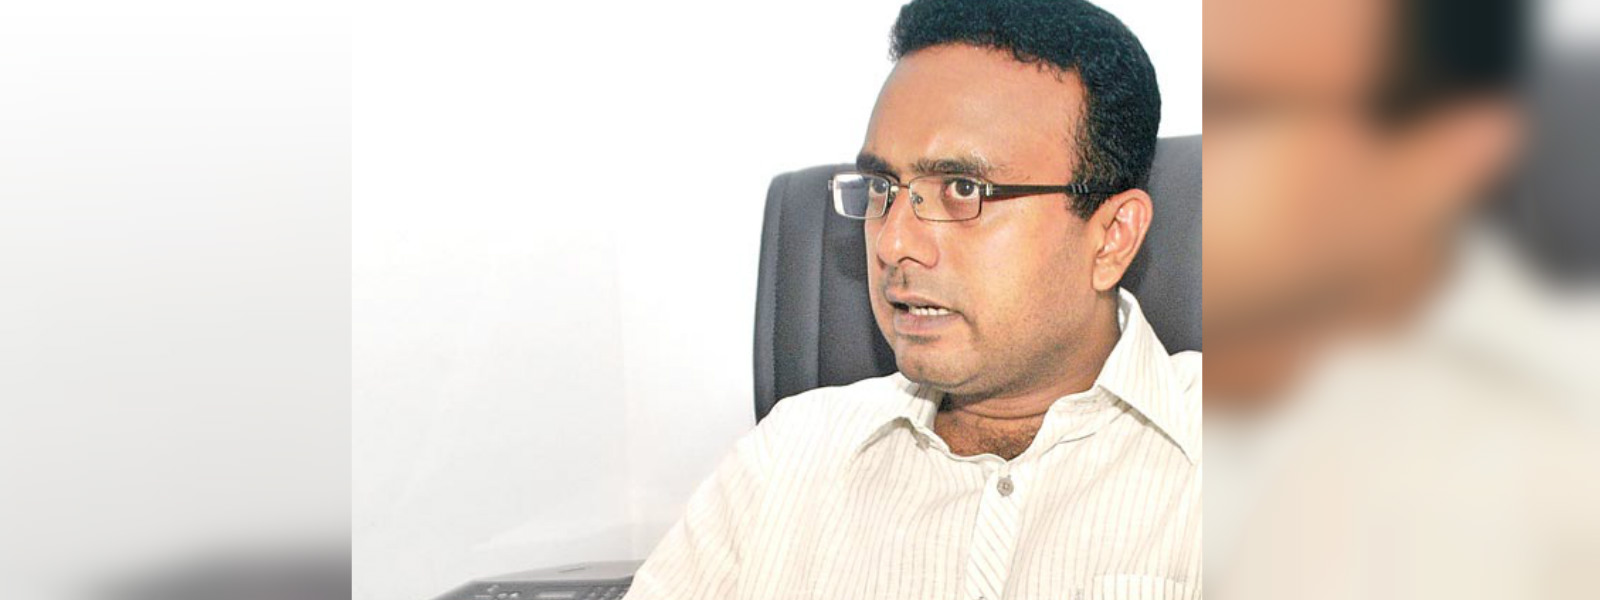 Manusha seeks removal of justice minister Sabry